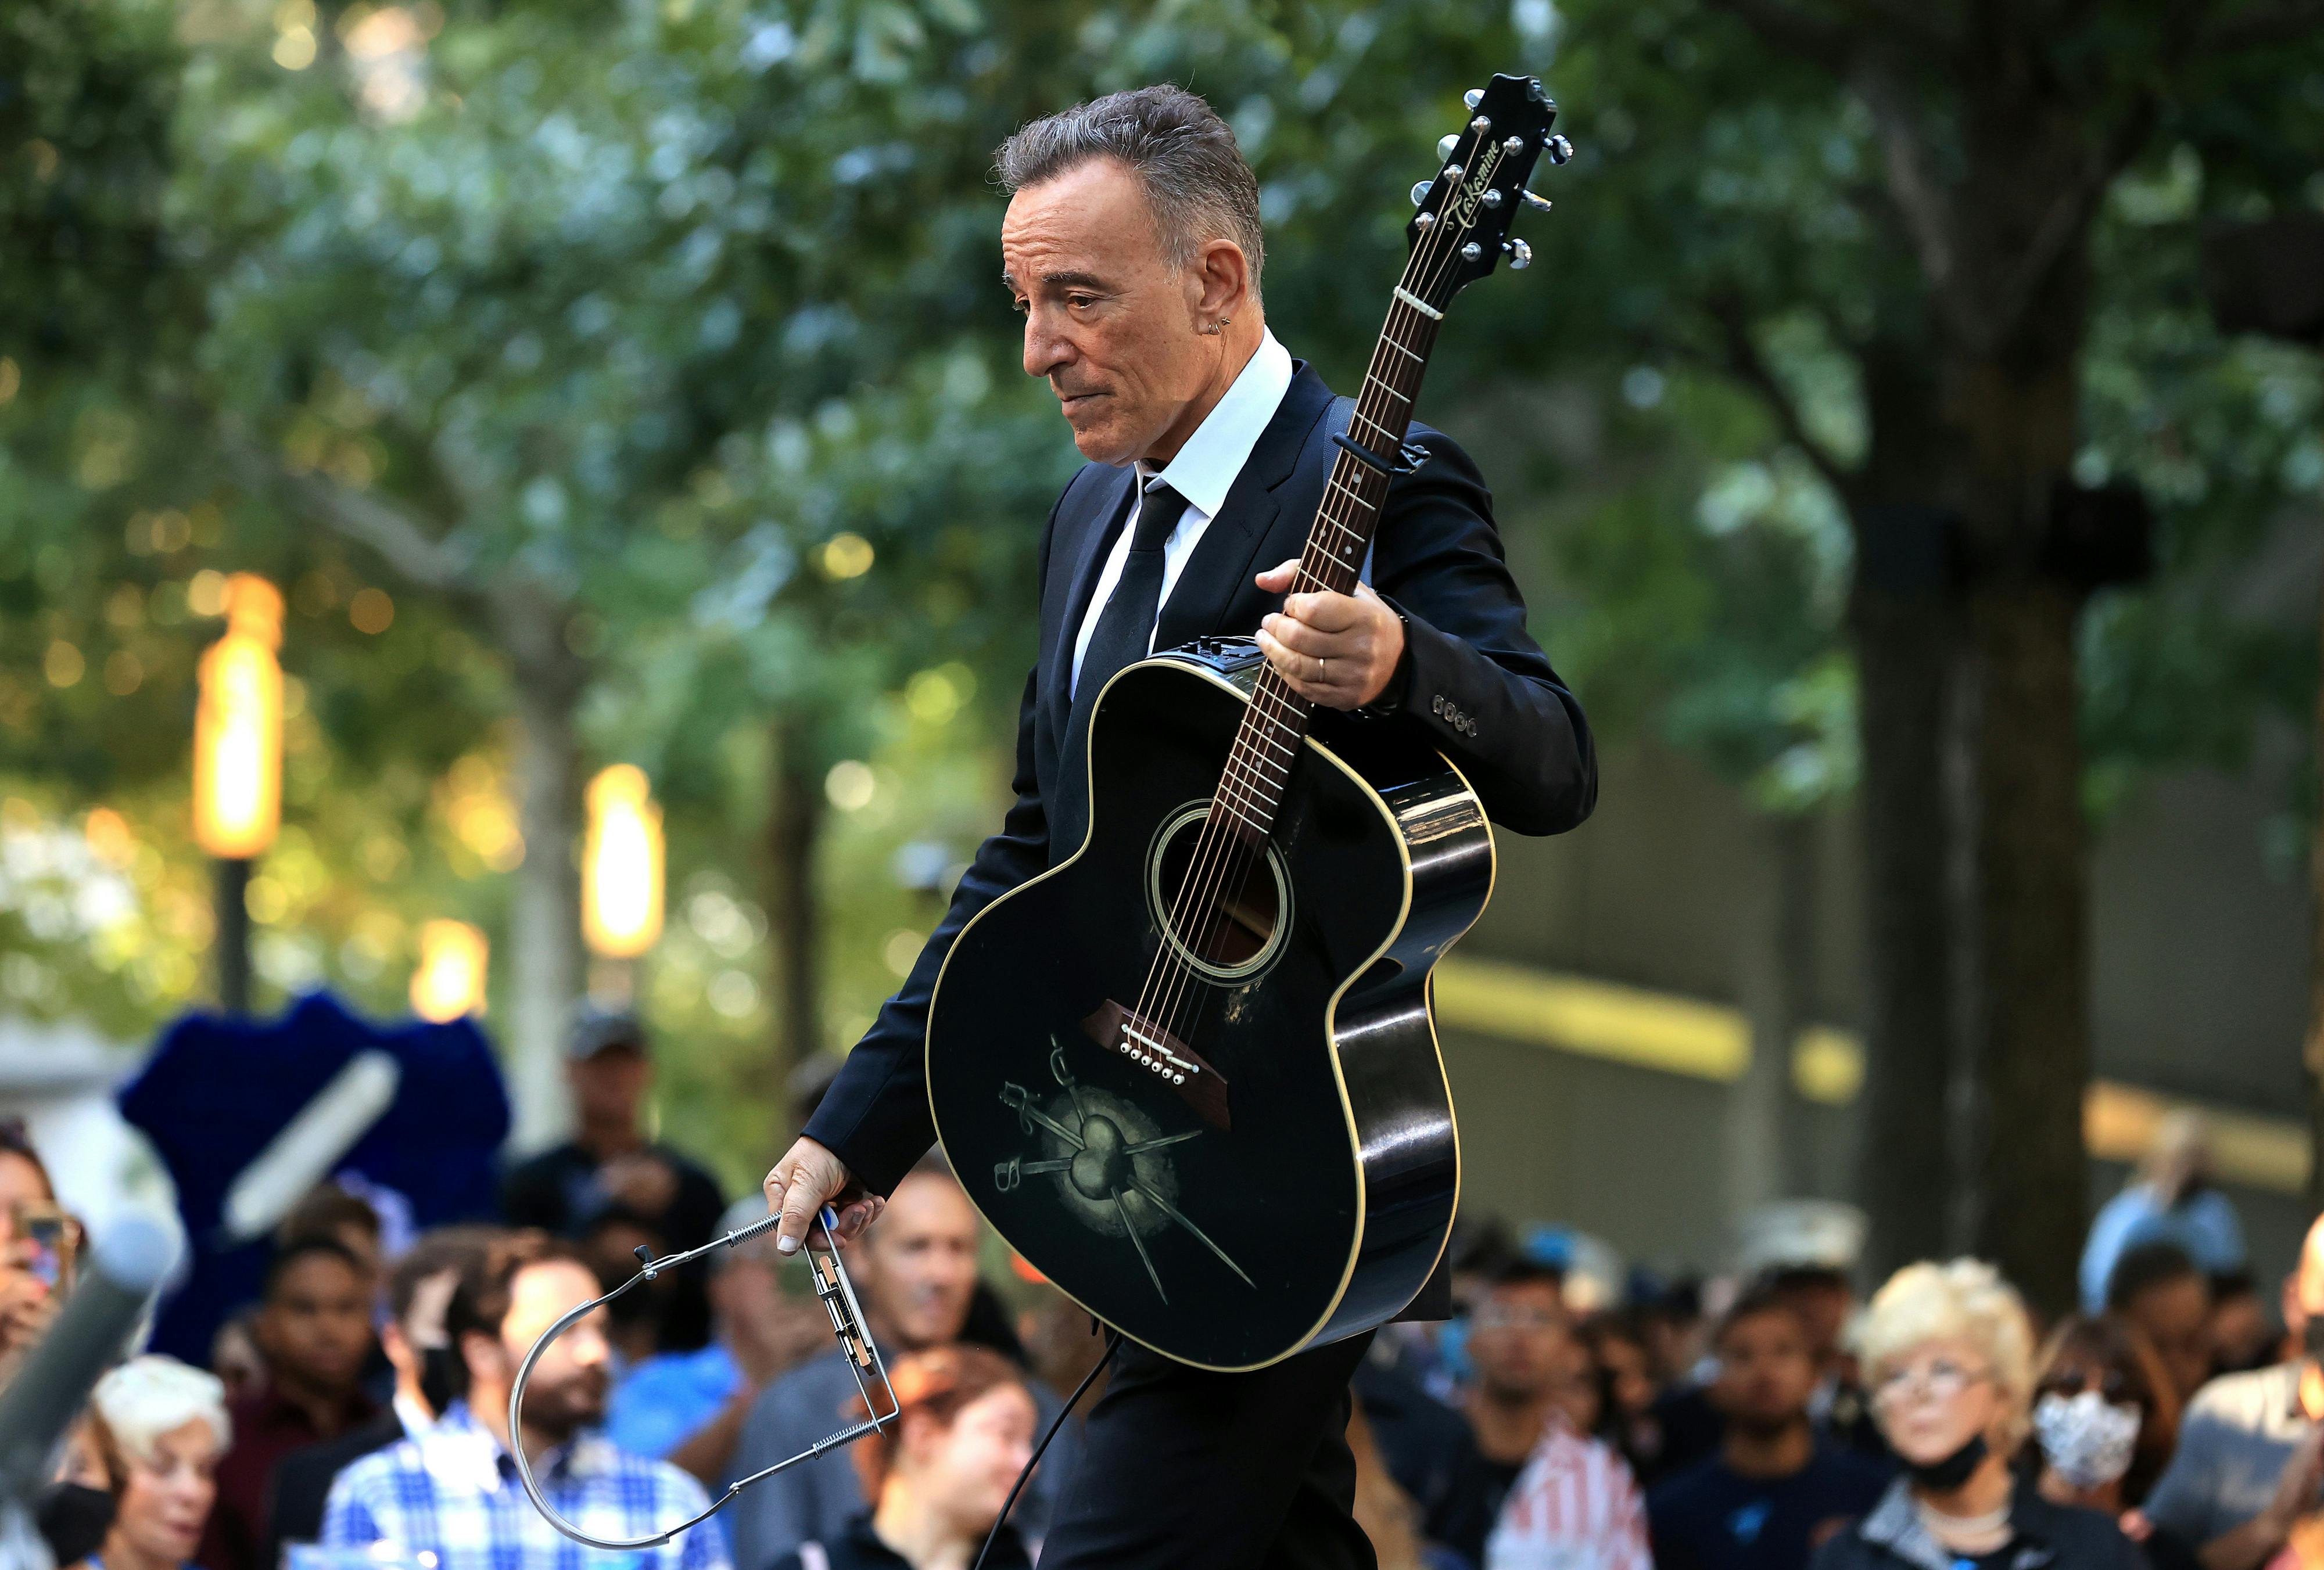 Bruce Springsteen spiller to koncerter i Danmark næste sommer